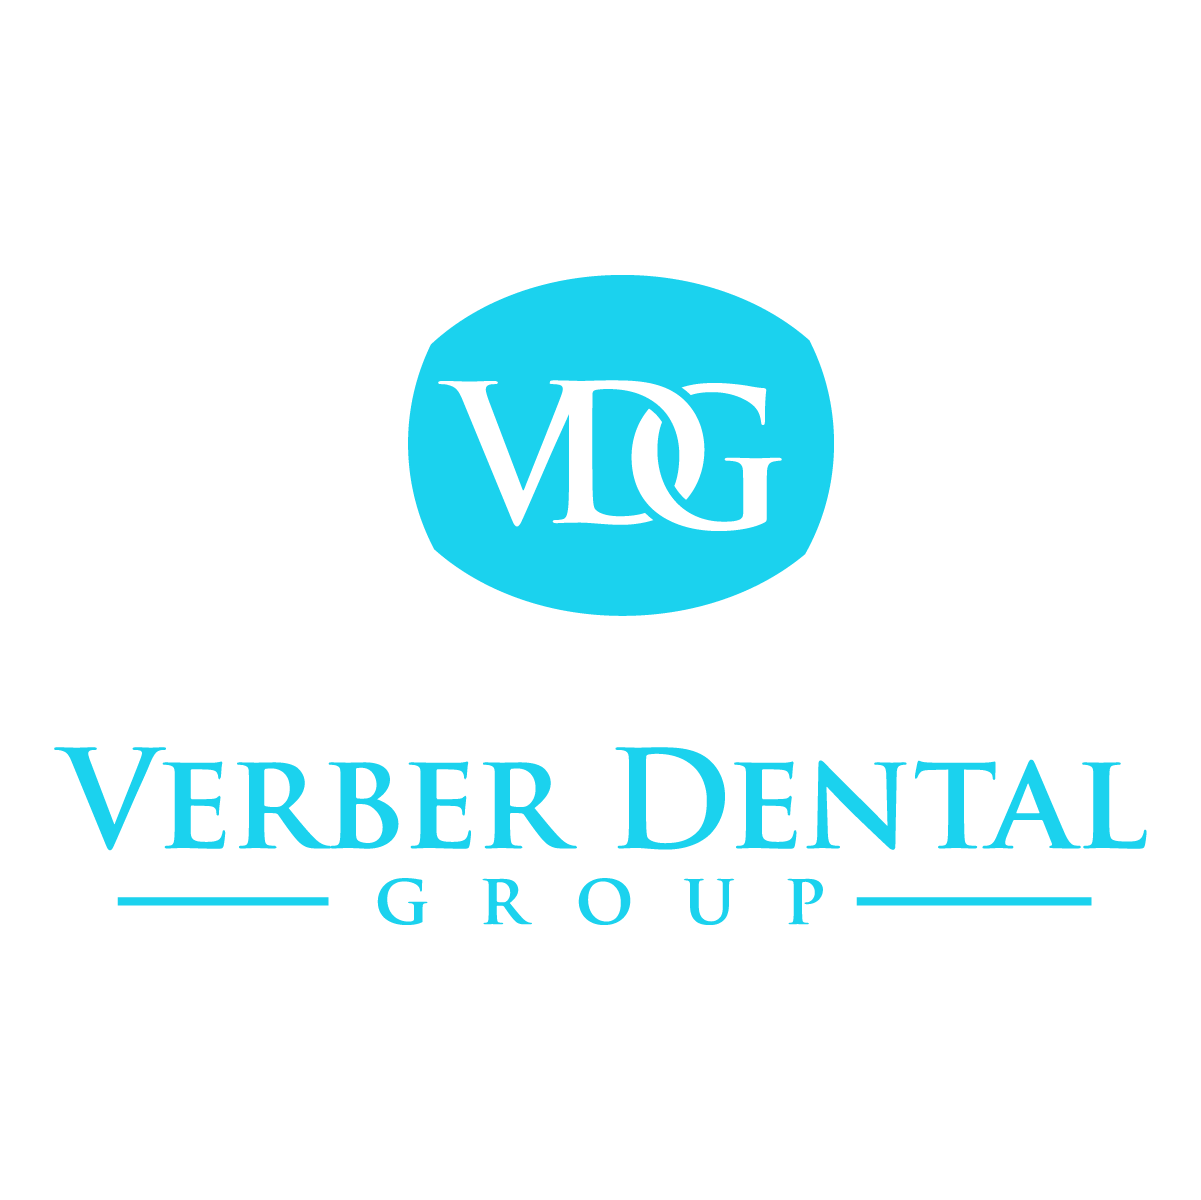 Verber Dental Group